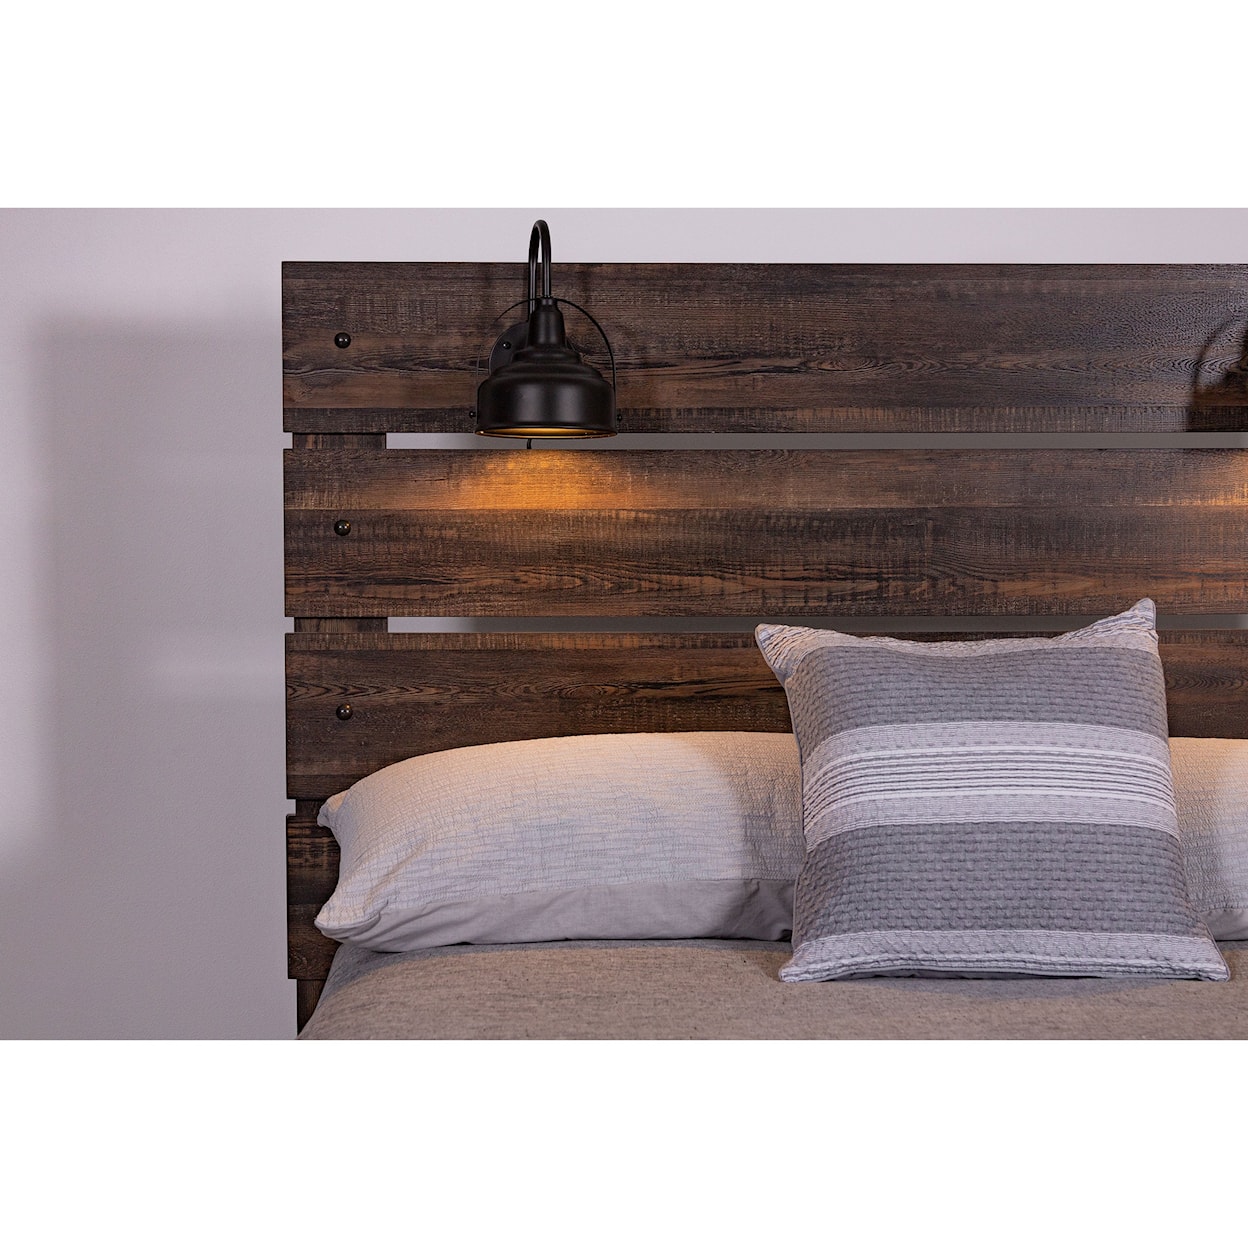 Global Furniture LINWOOD Queen Bedroom Set with Lamps